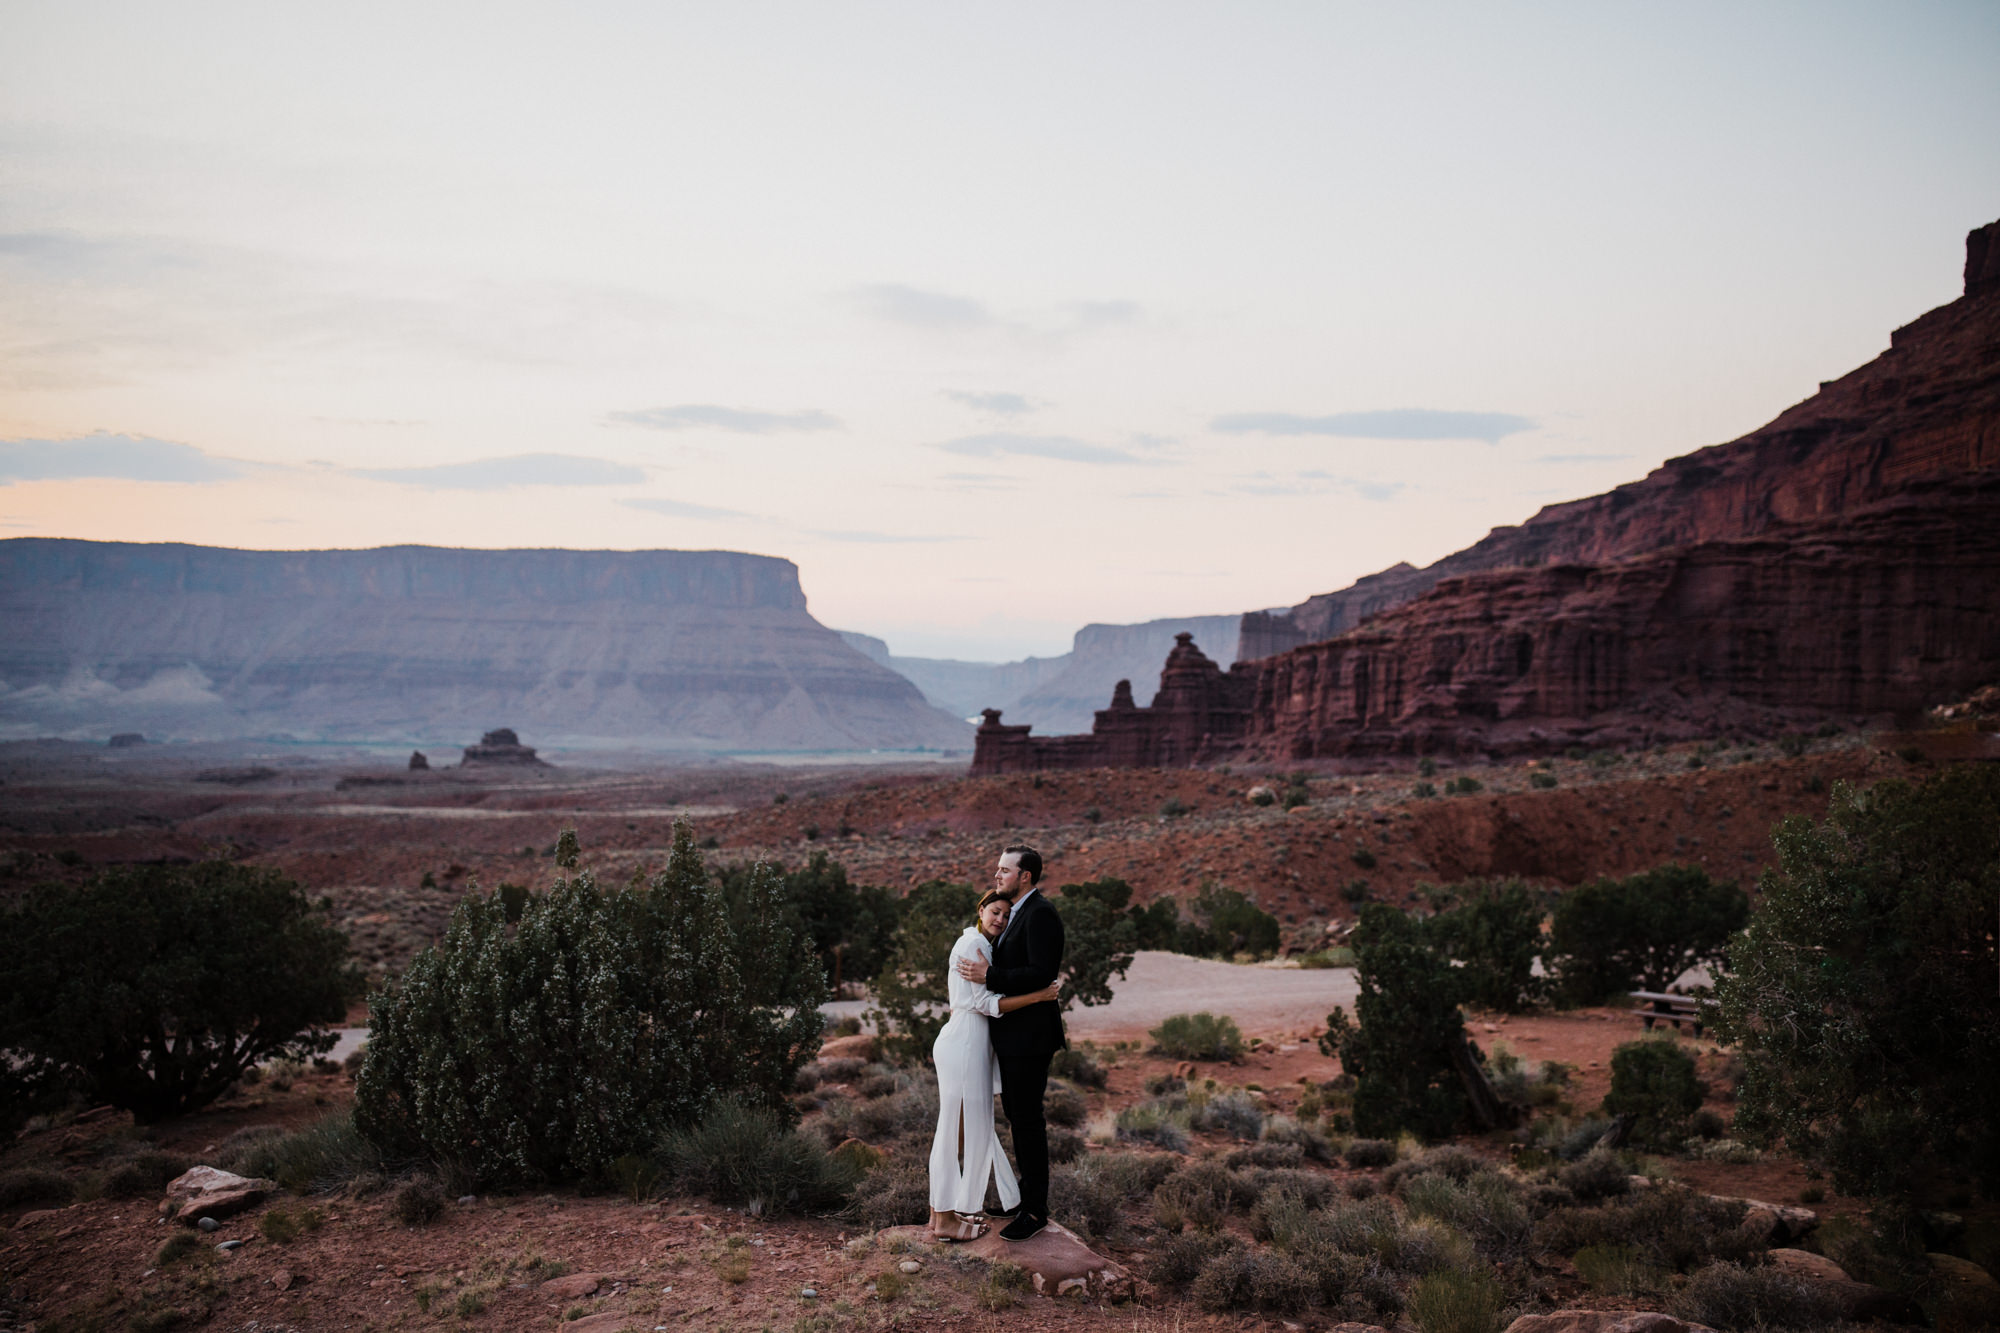 adventurous desert engagement session | moab, utah wedding photographer | www.thehearnes.com | the hearnes adventure photography